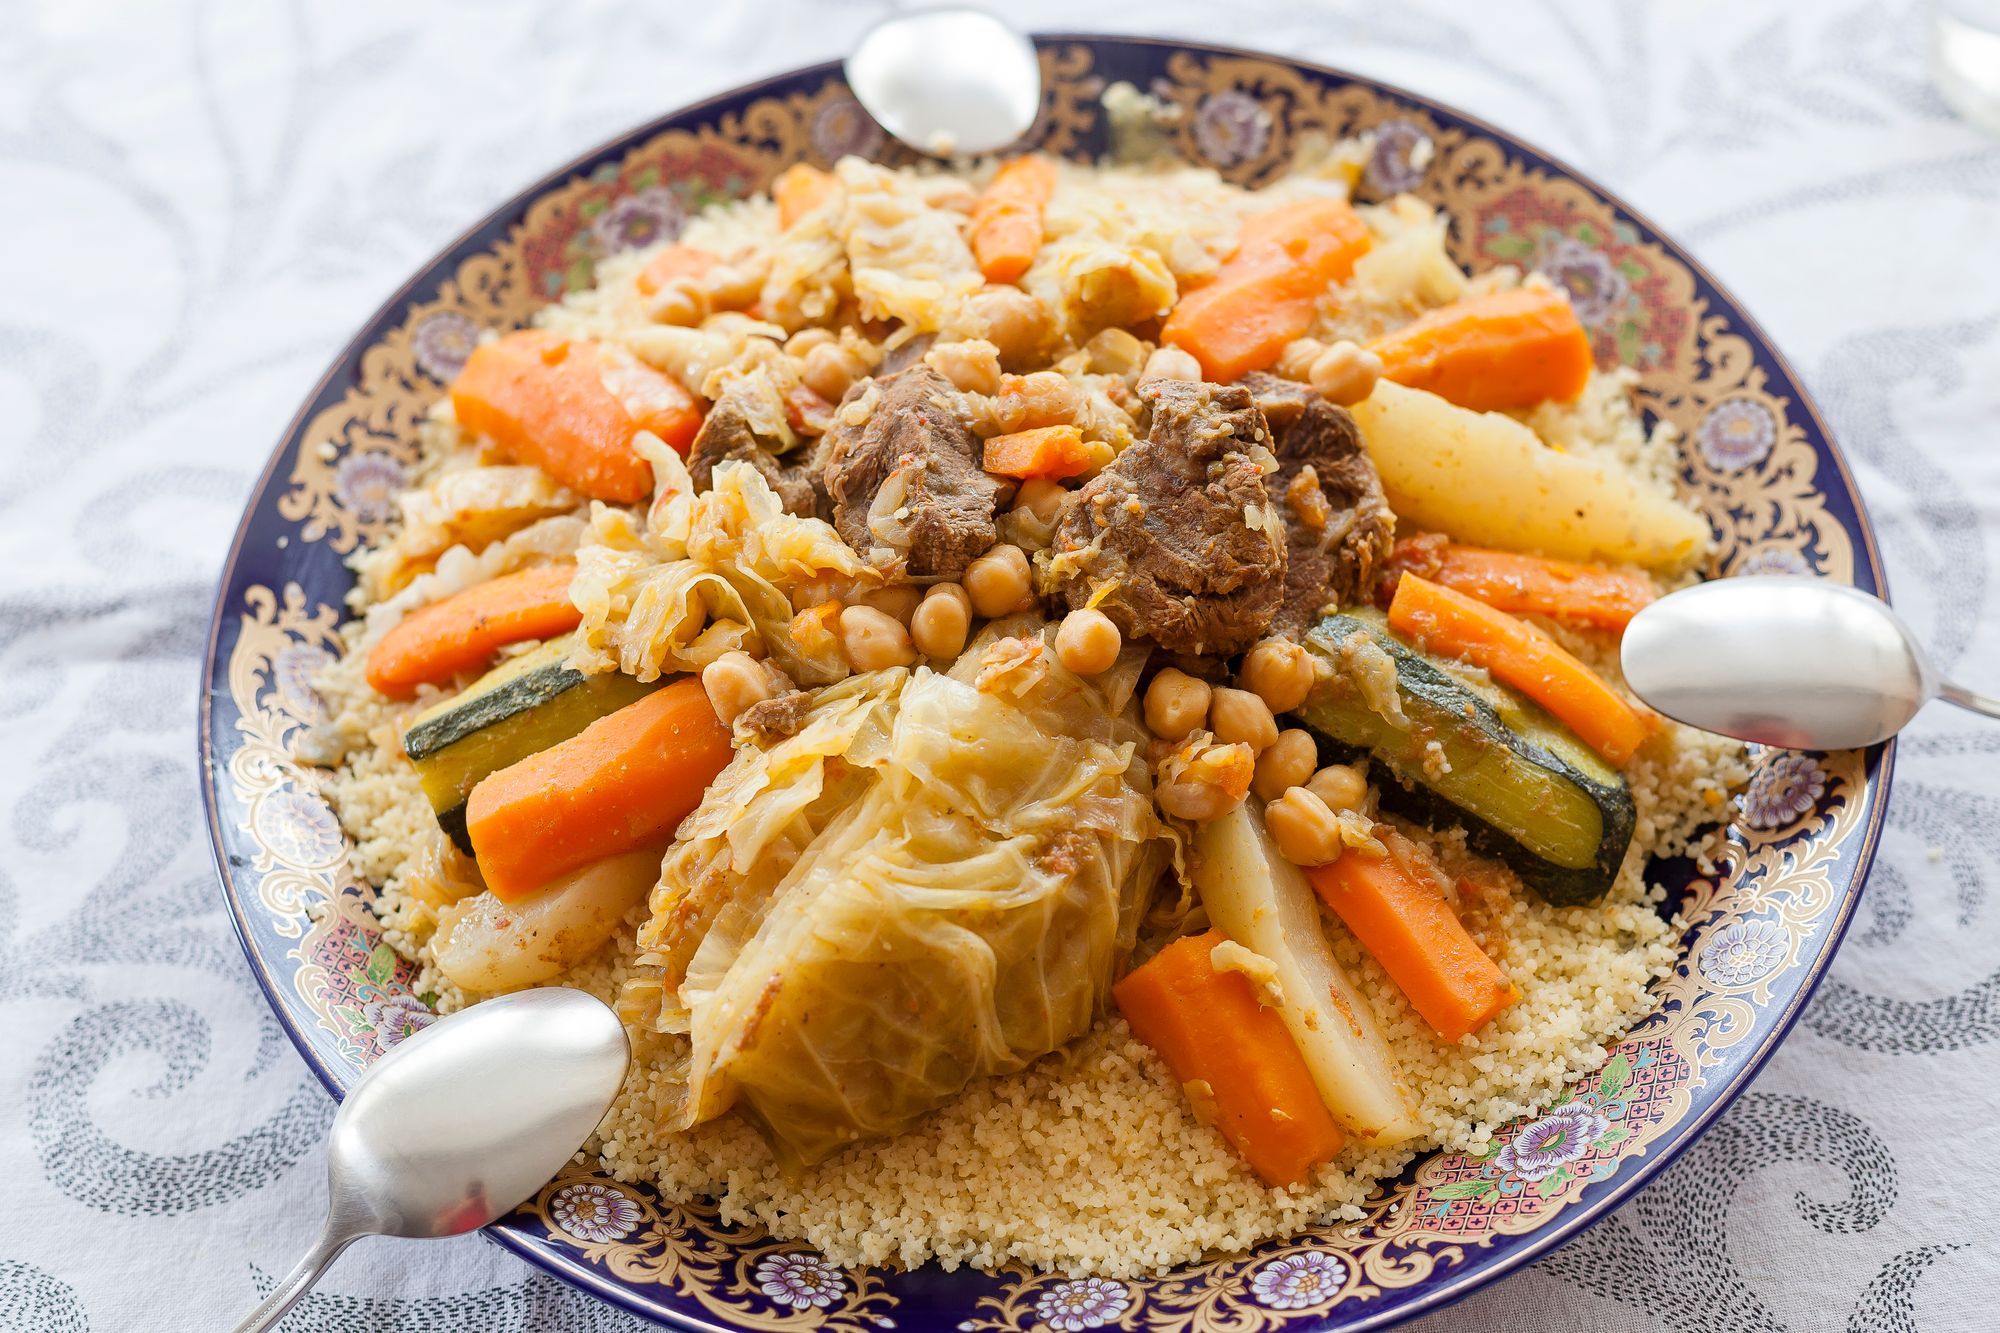 Moroccan couscous at Eid al-Fitr